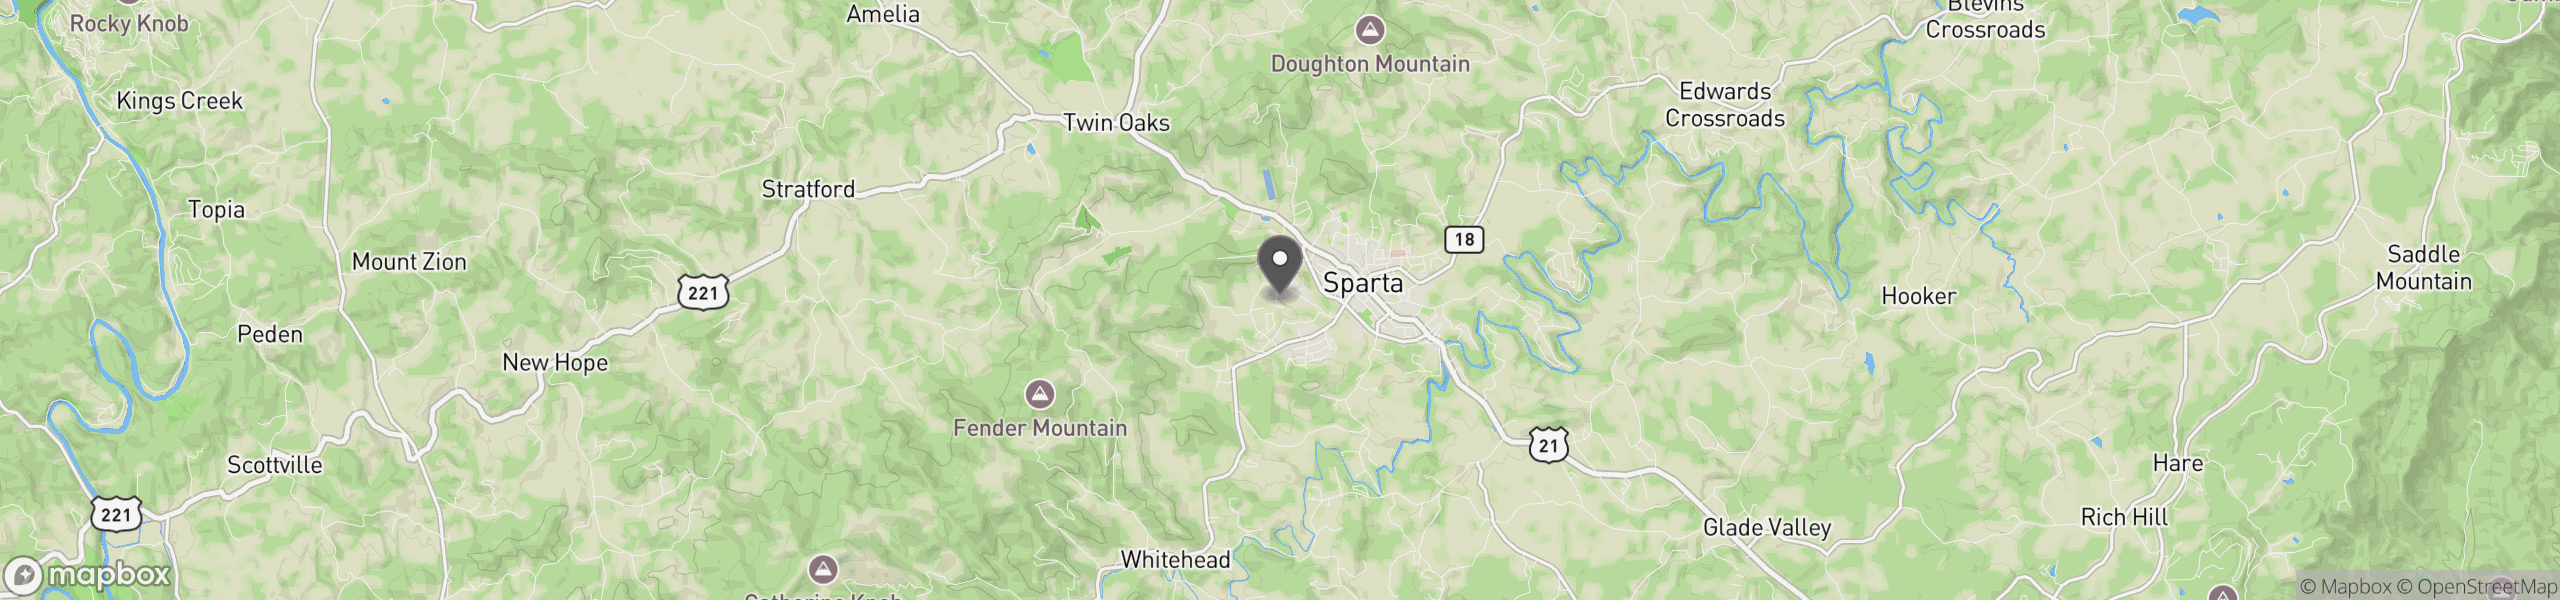 Sparta, NC